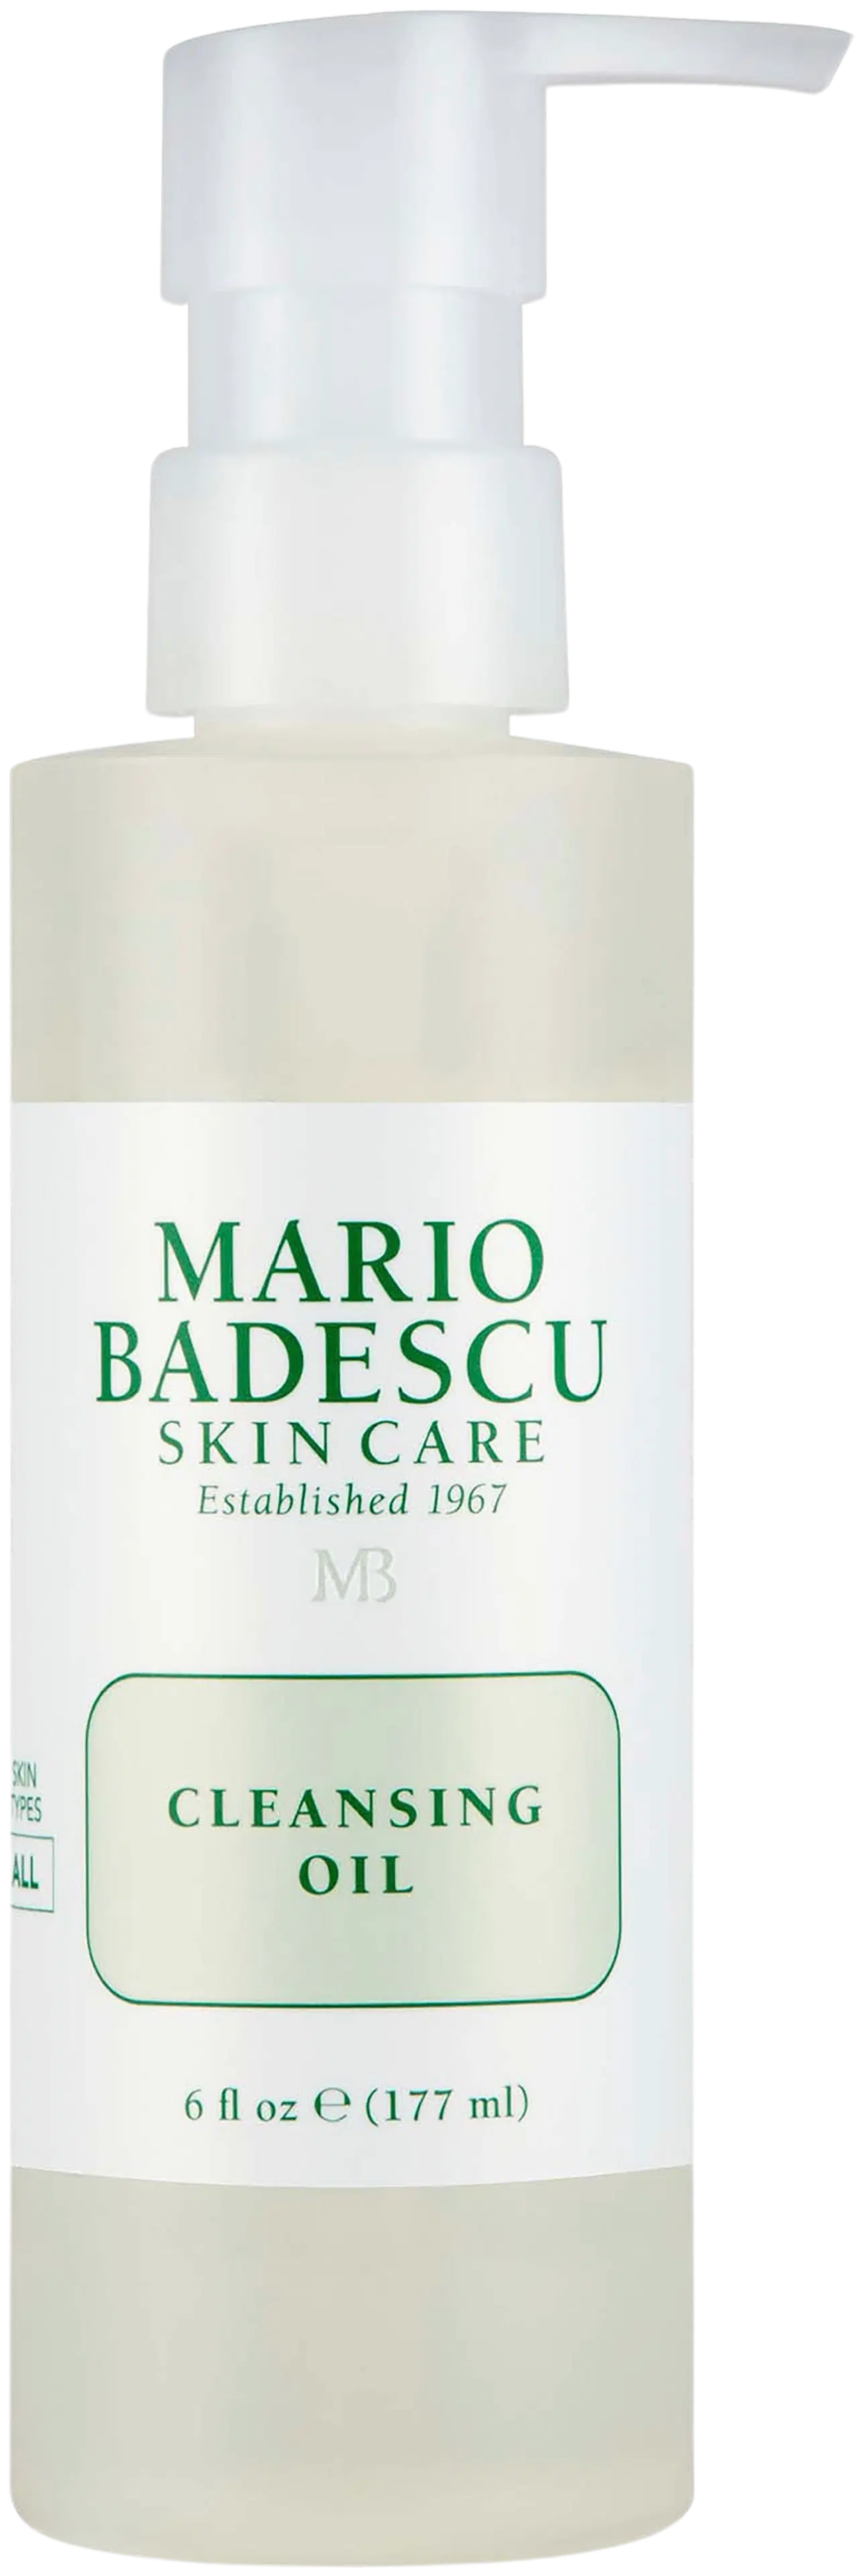 Mario Badescu Cleansing Oil puhdistusöljy 177ml